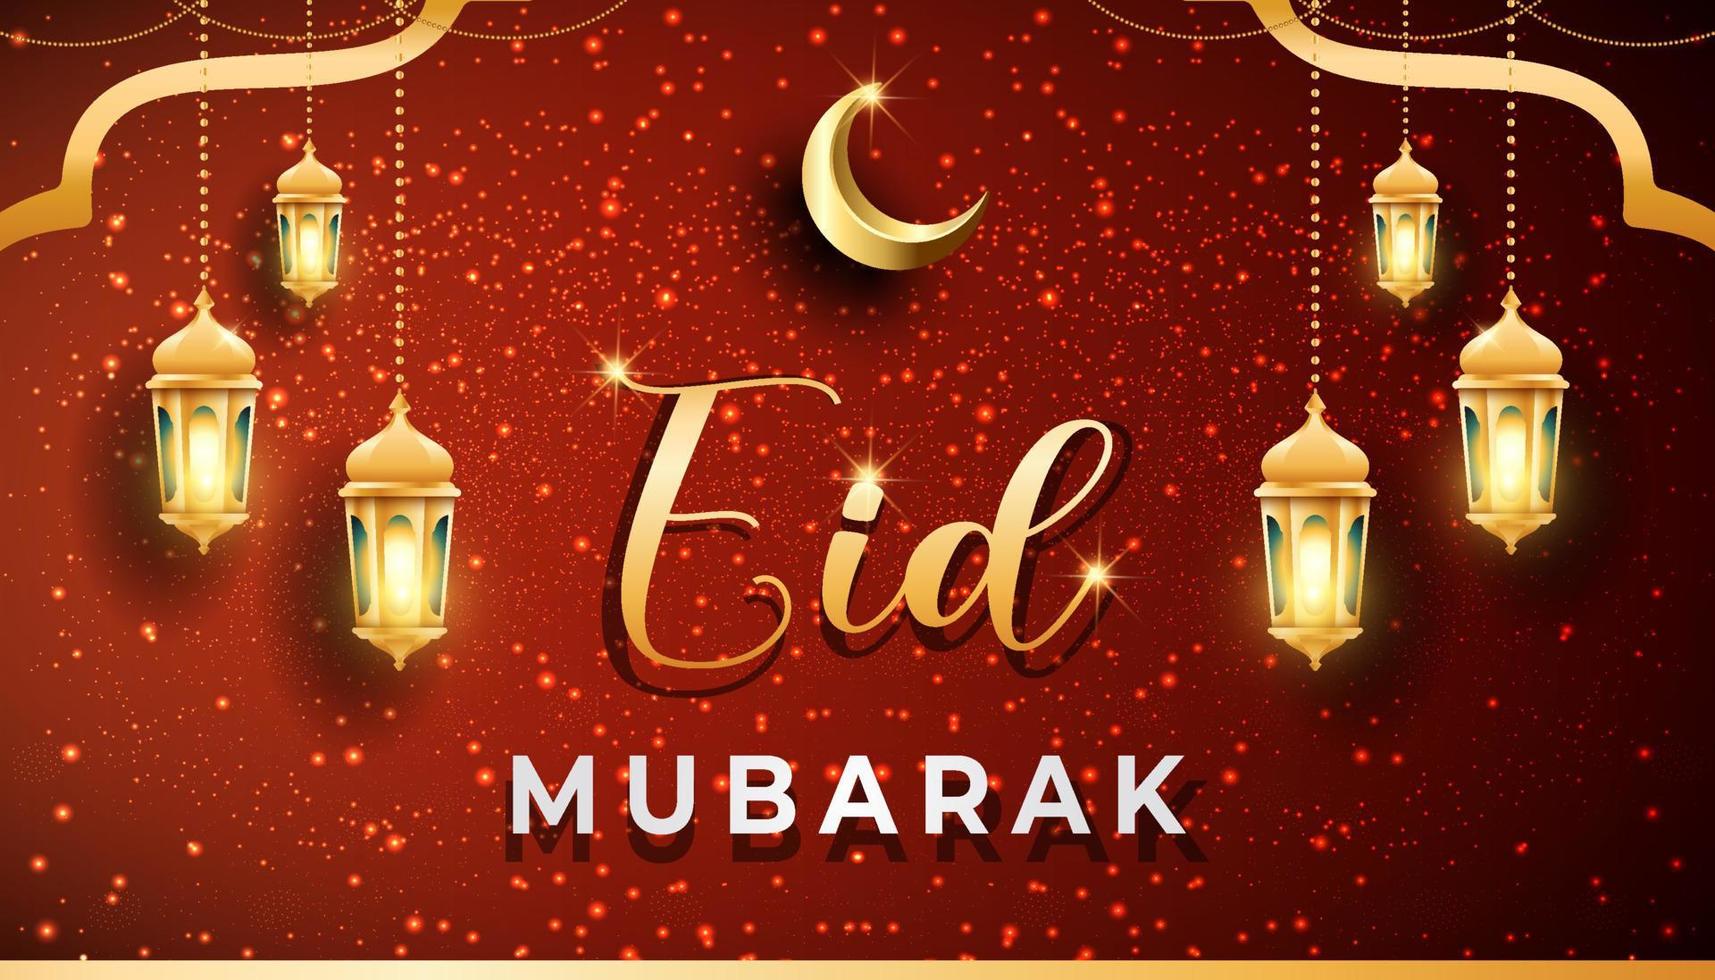 Eid ul-Adha mubarak, Eid ul-Adha Greeting Card Design, Eid mubarak banner template, Eid mubarak vector